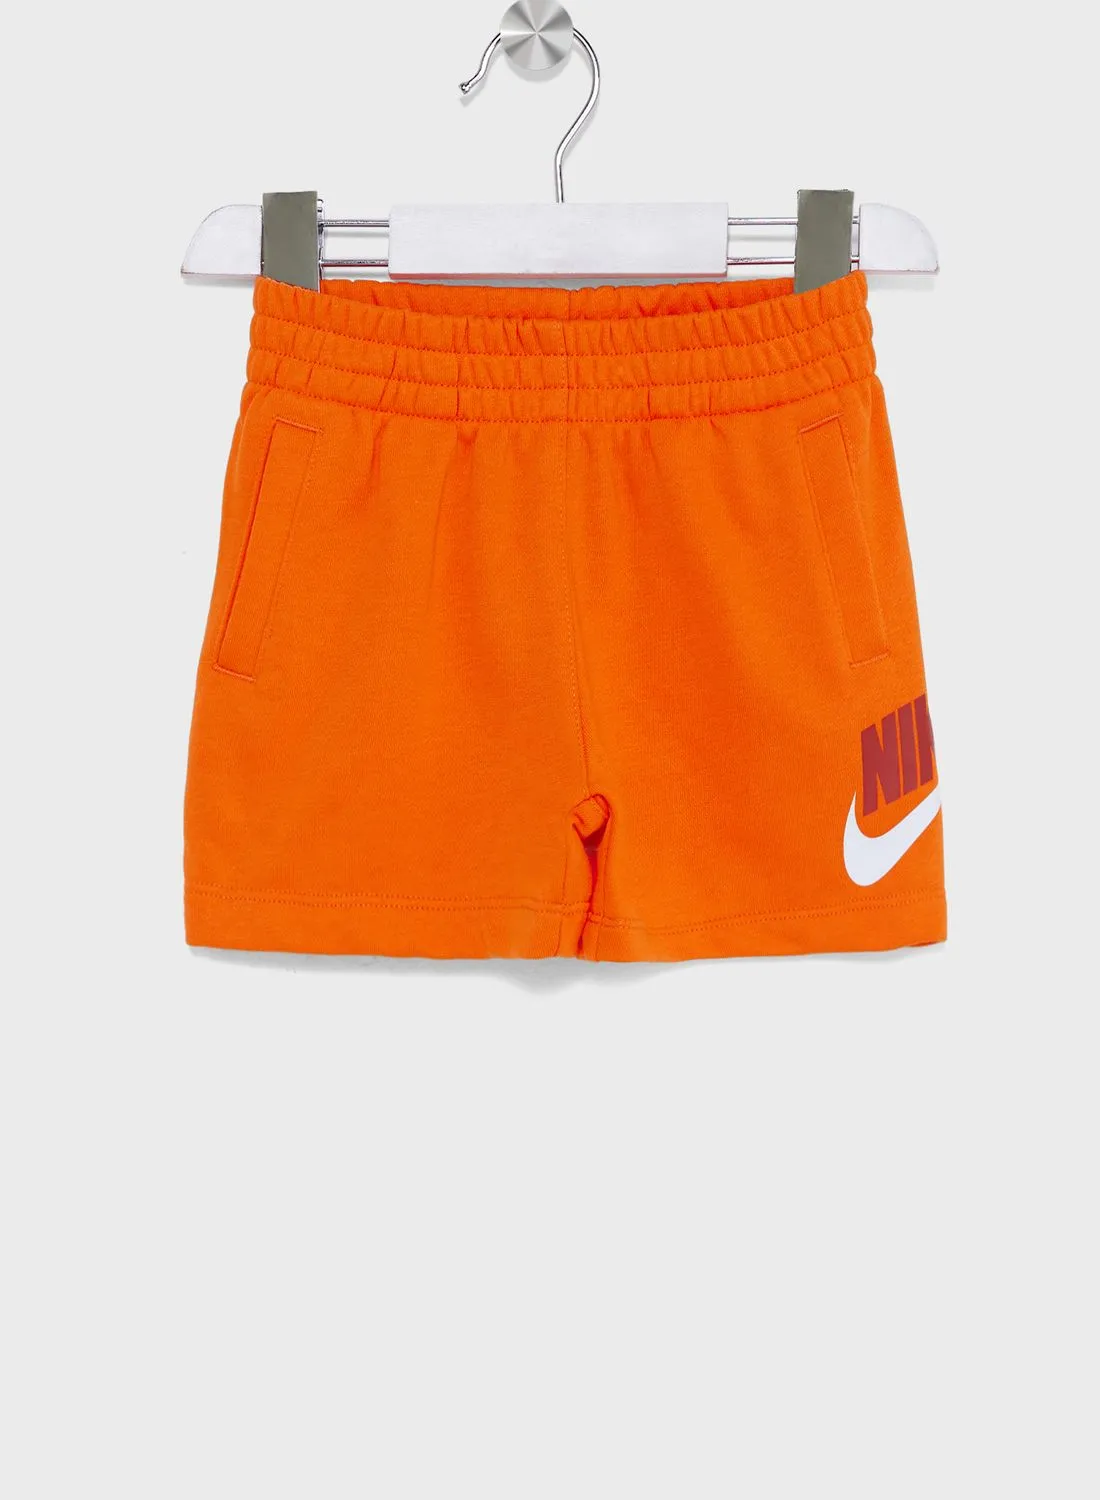 Nike Kids Nsw Hybrid Club Shorts